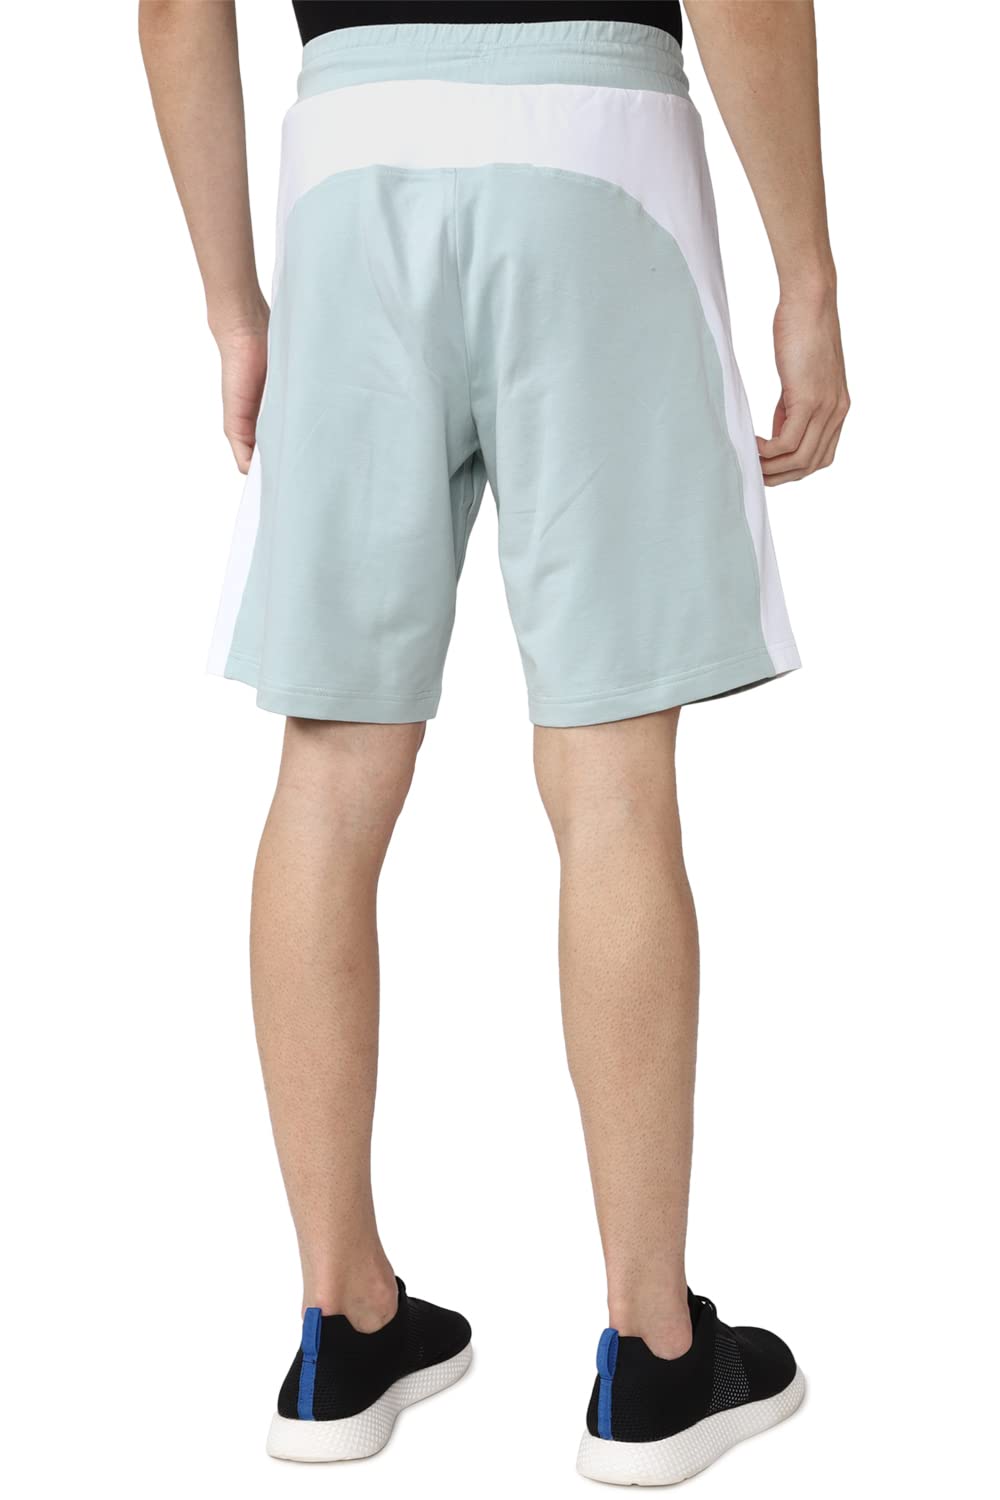 Van Heusen Flex Men's Chino Shorts (VFLOAATFA59937_Light Blue_36)